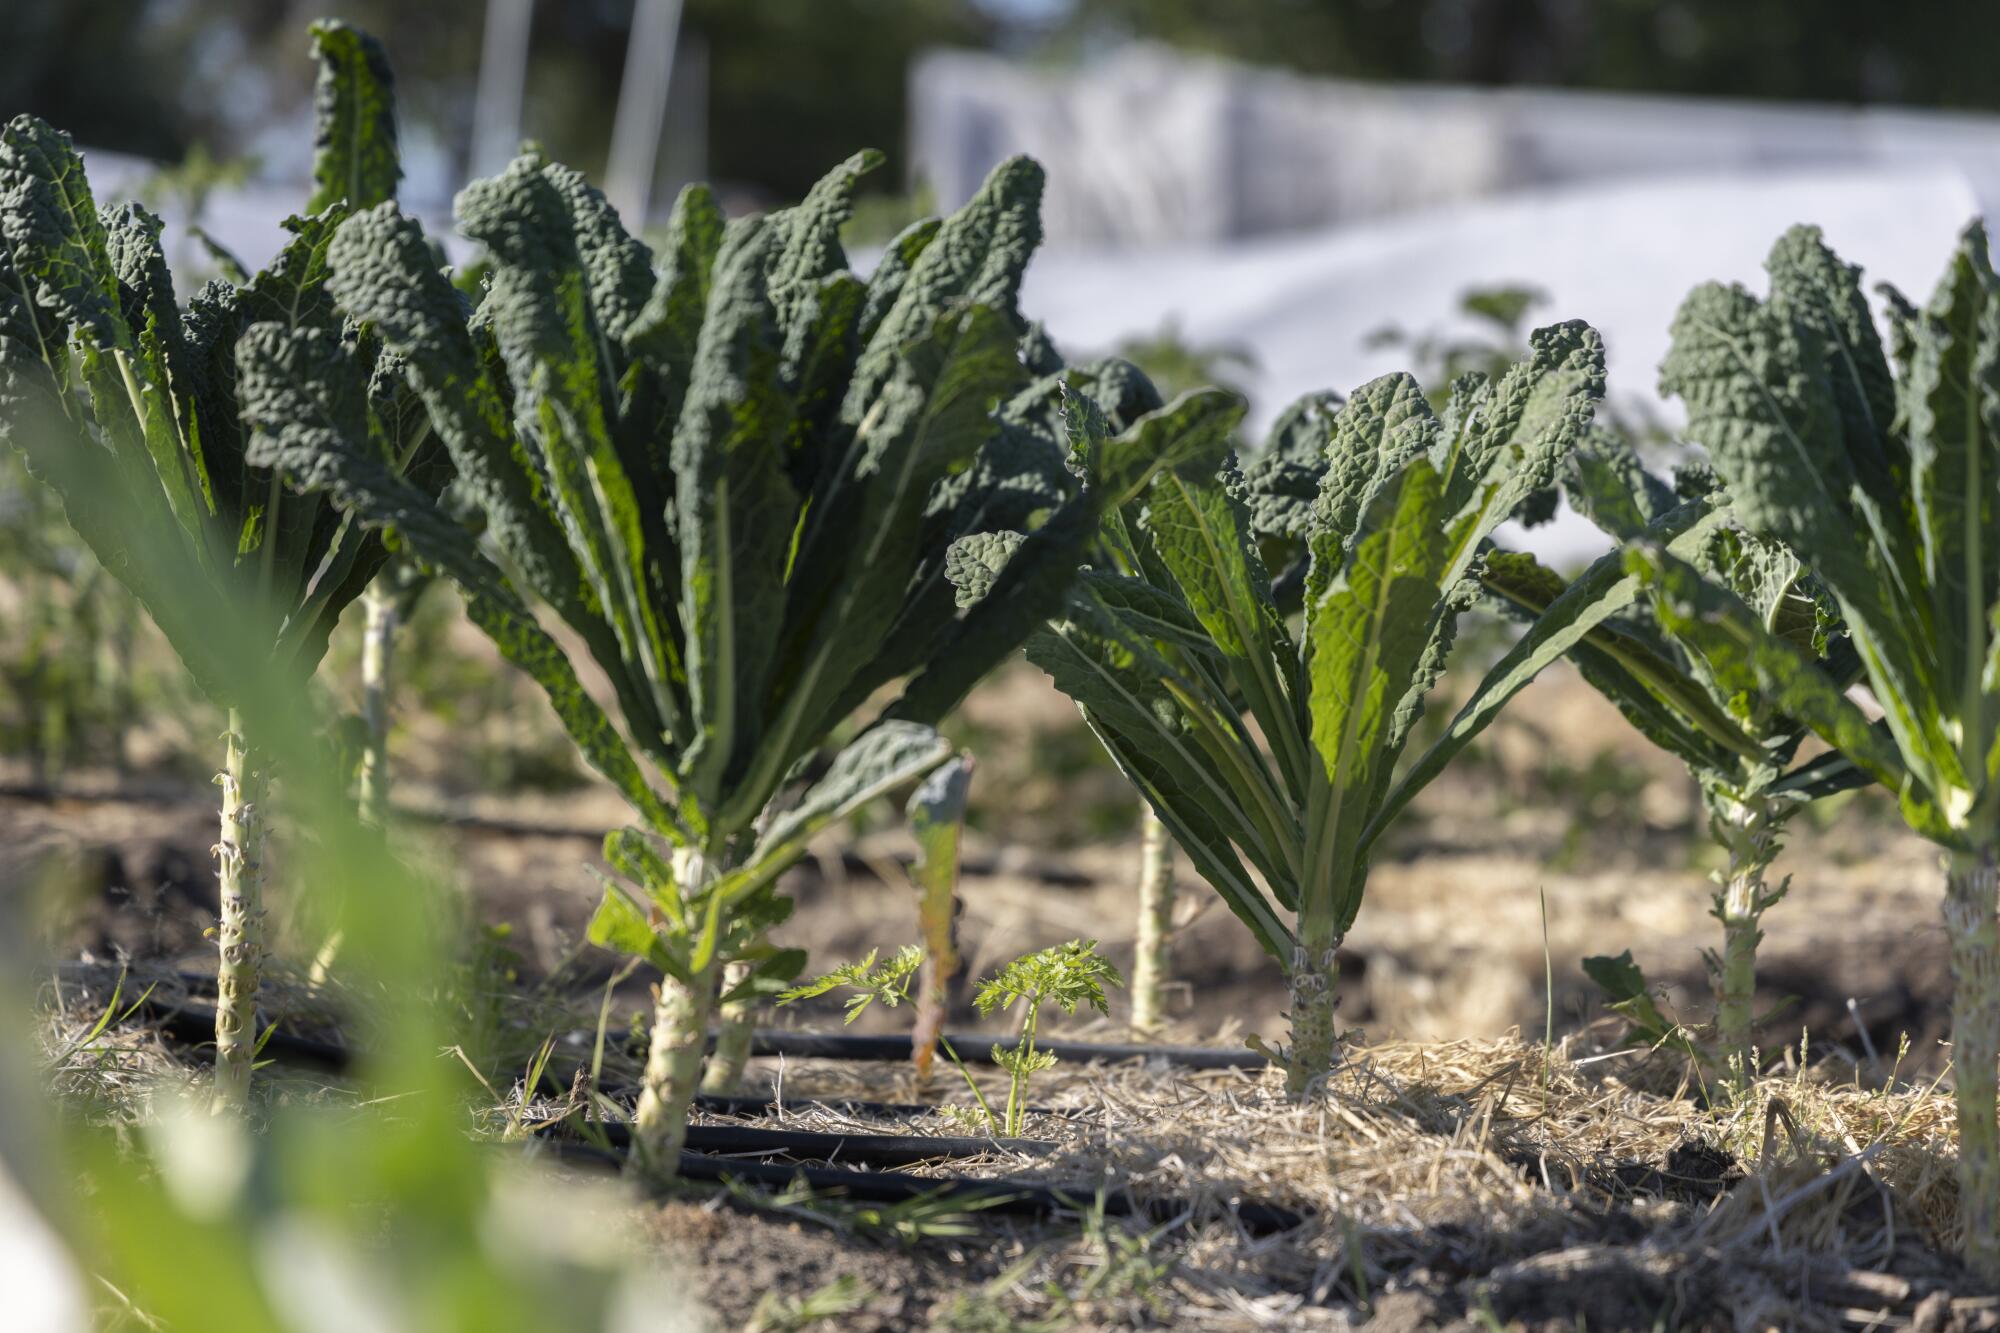 Vegetables growing on Urban Tilth farm